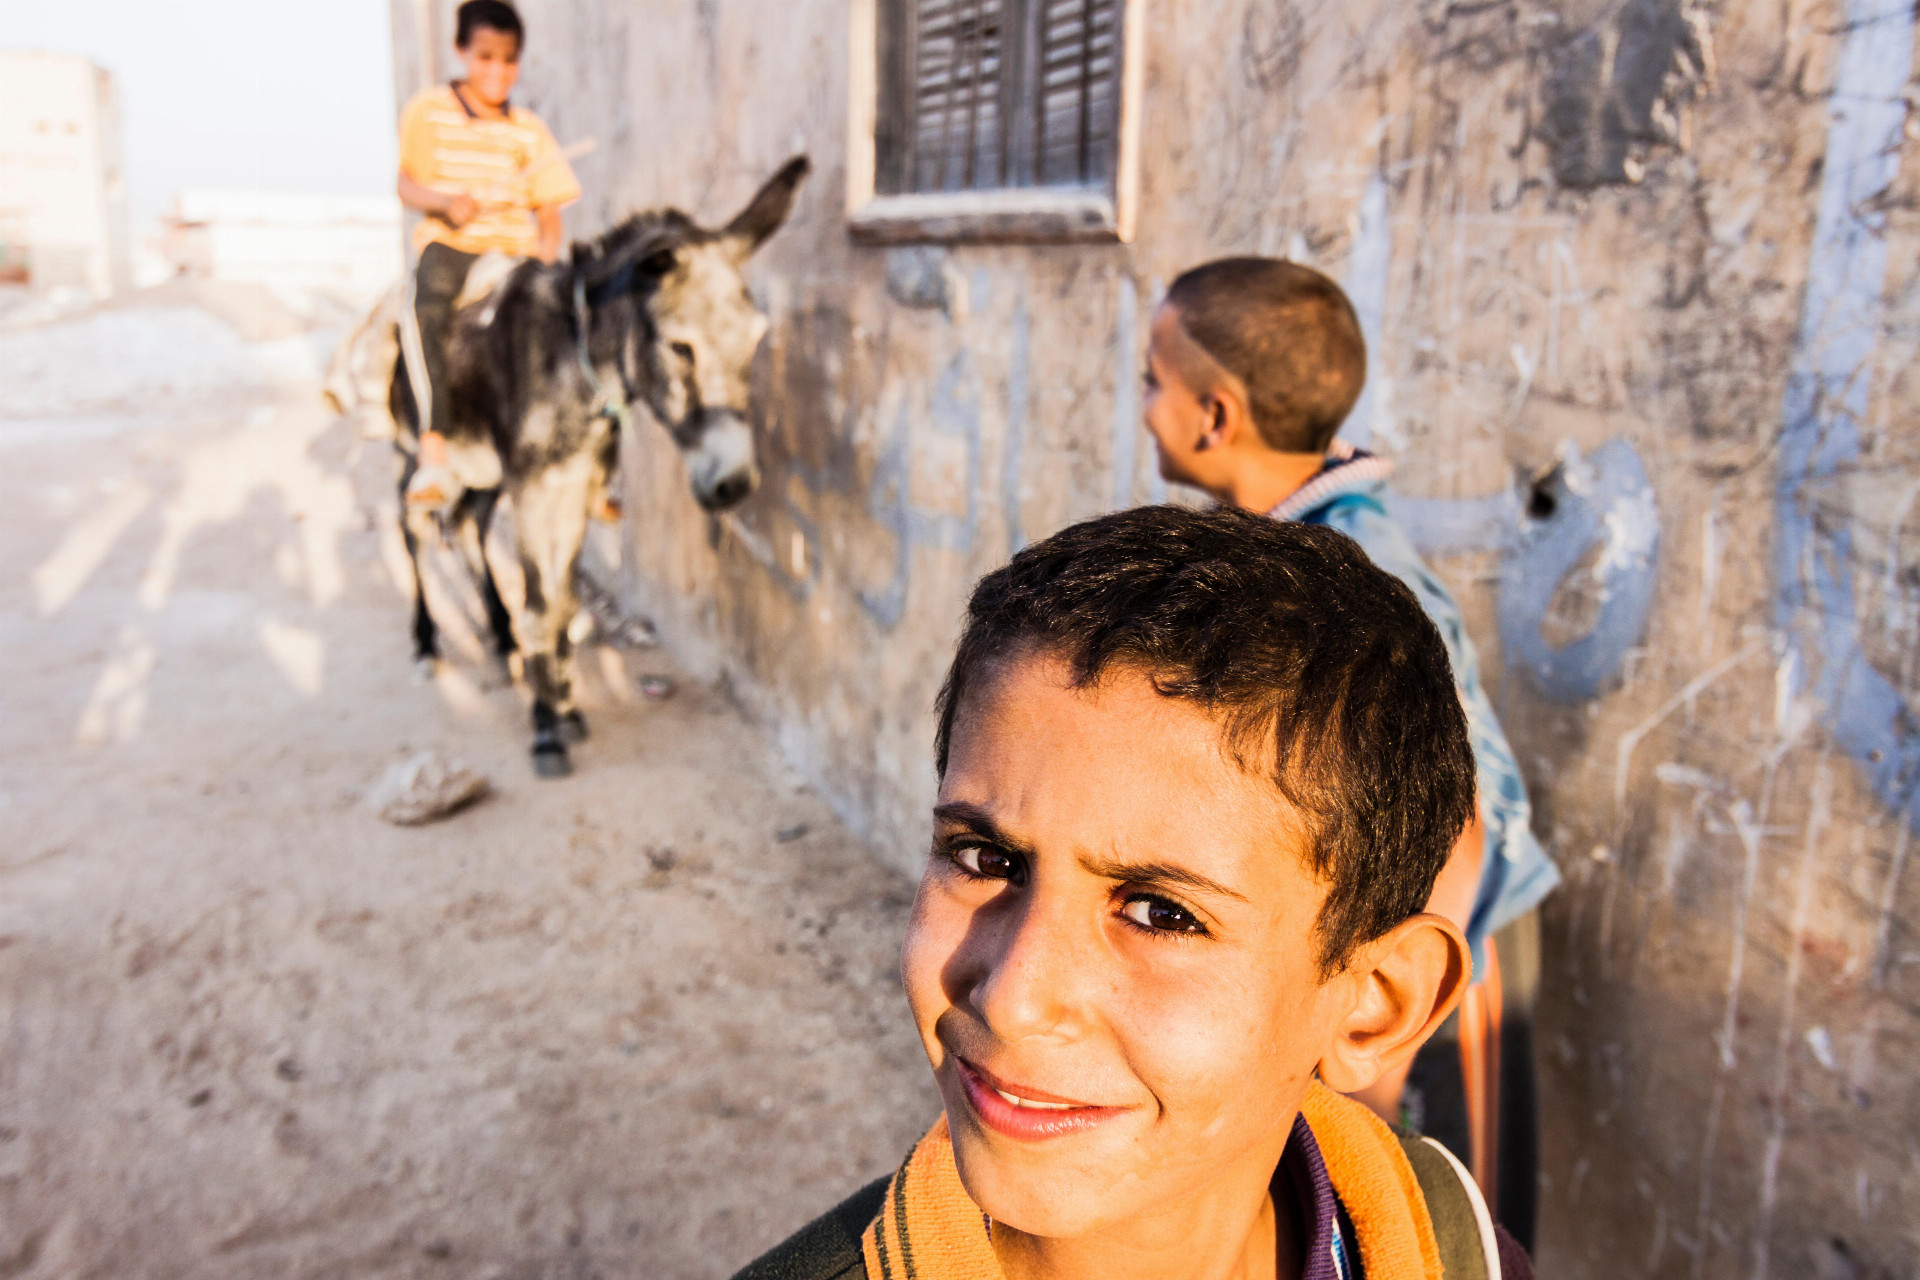 Coptic children in Minya, Egypt. Credit: Luis Dafos / Alamy